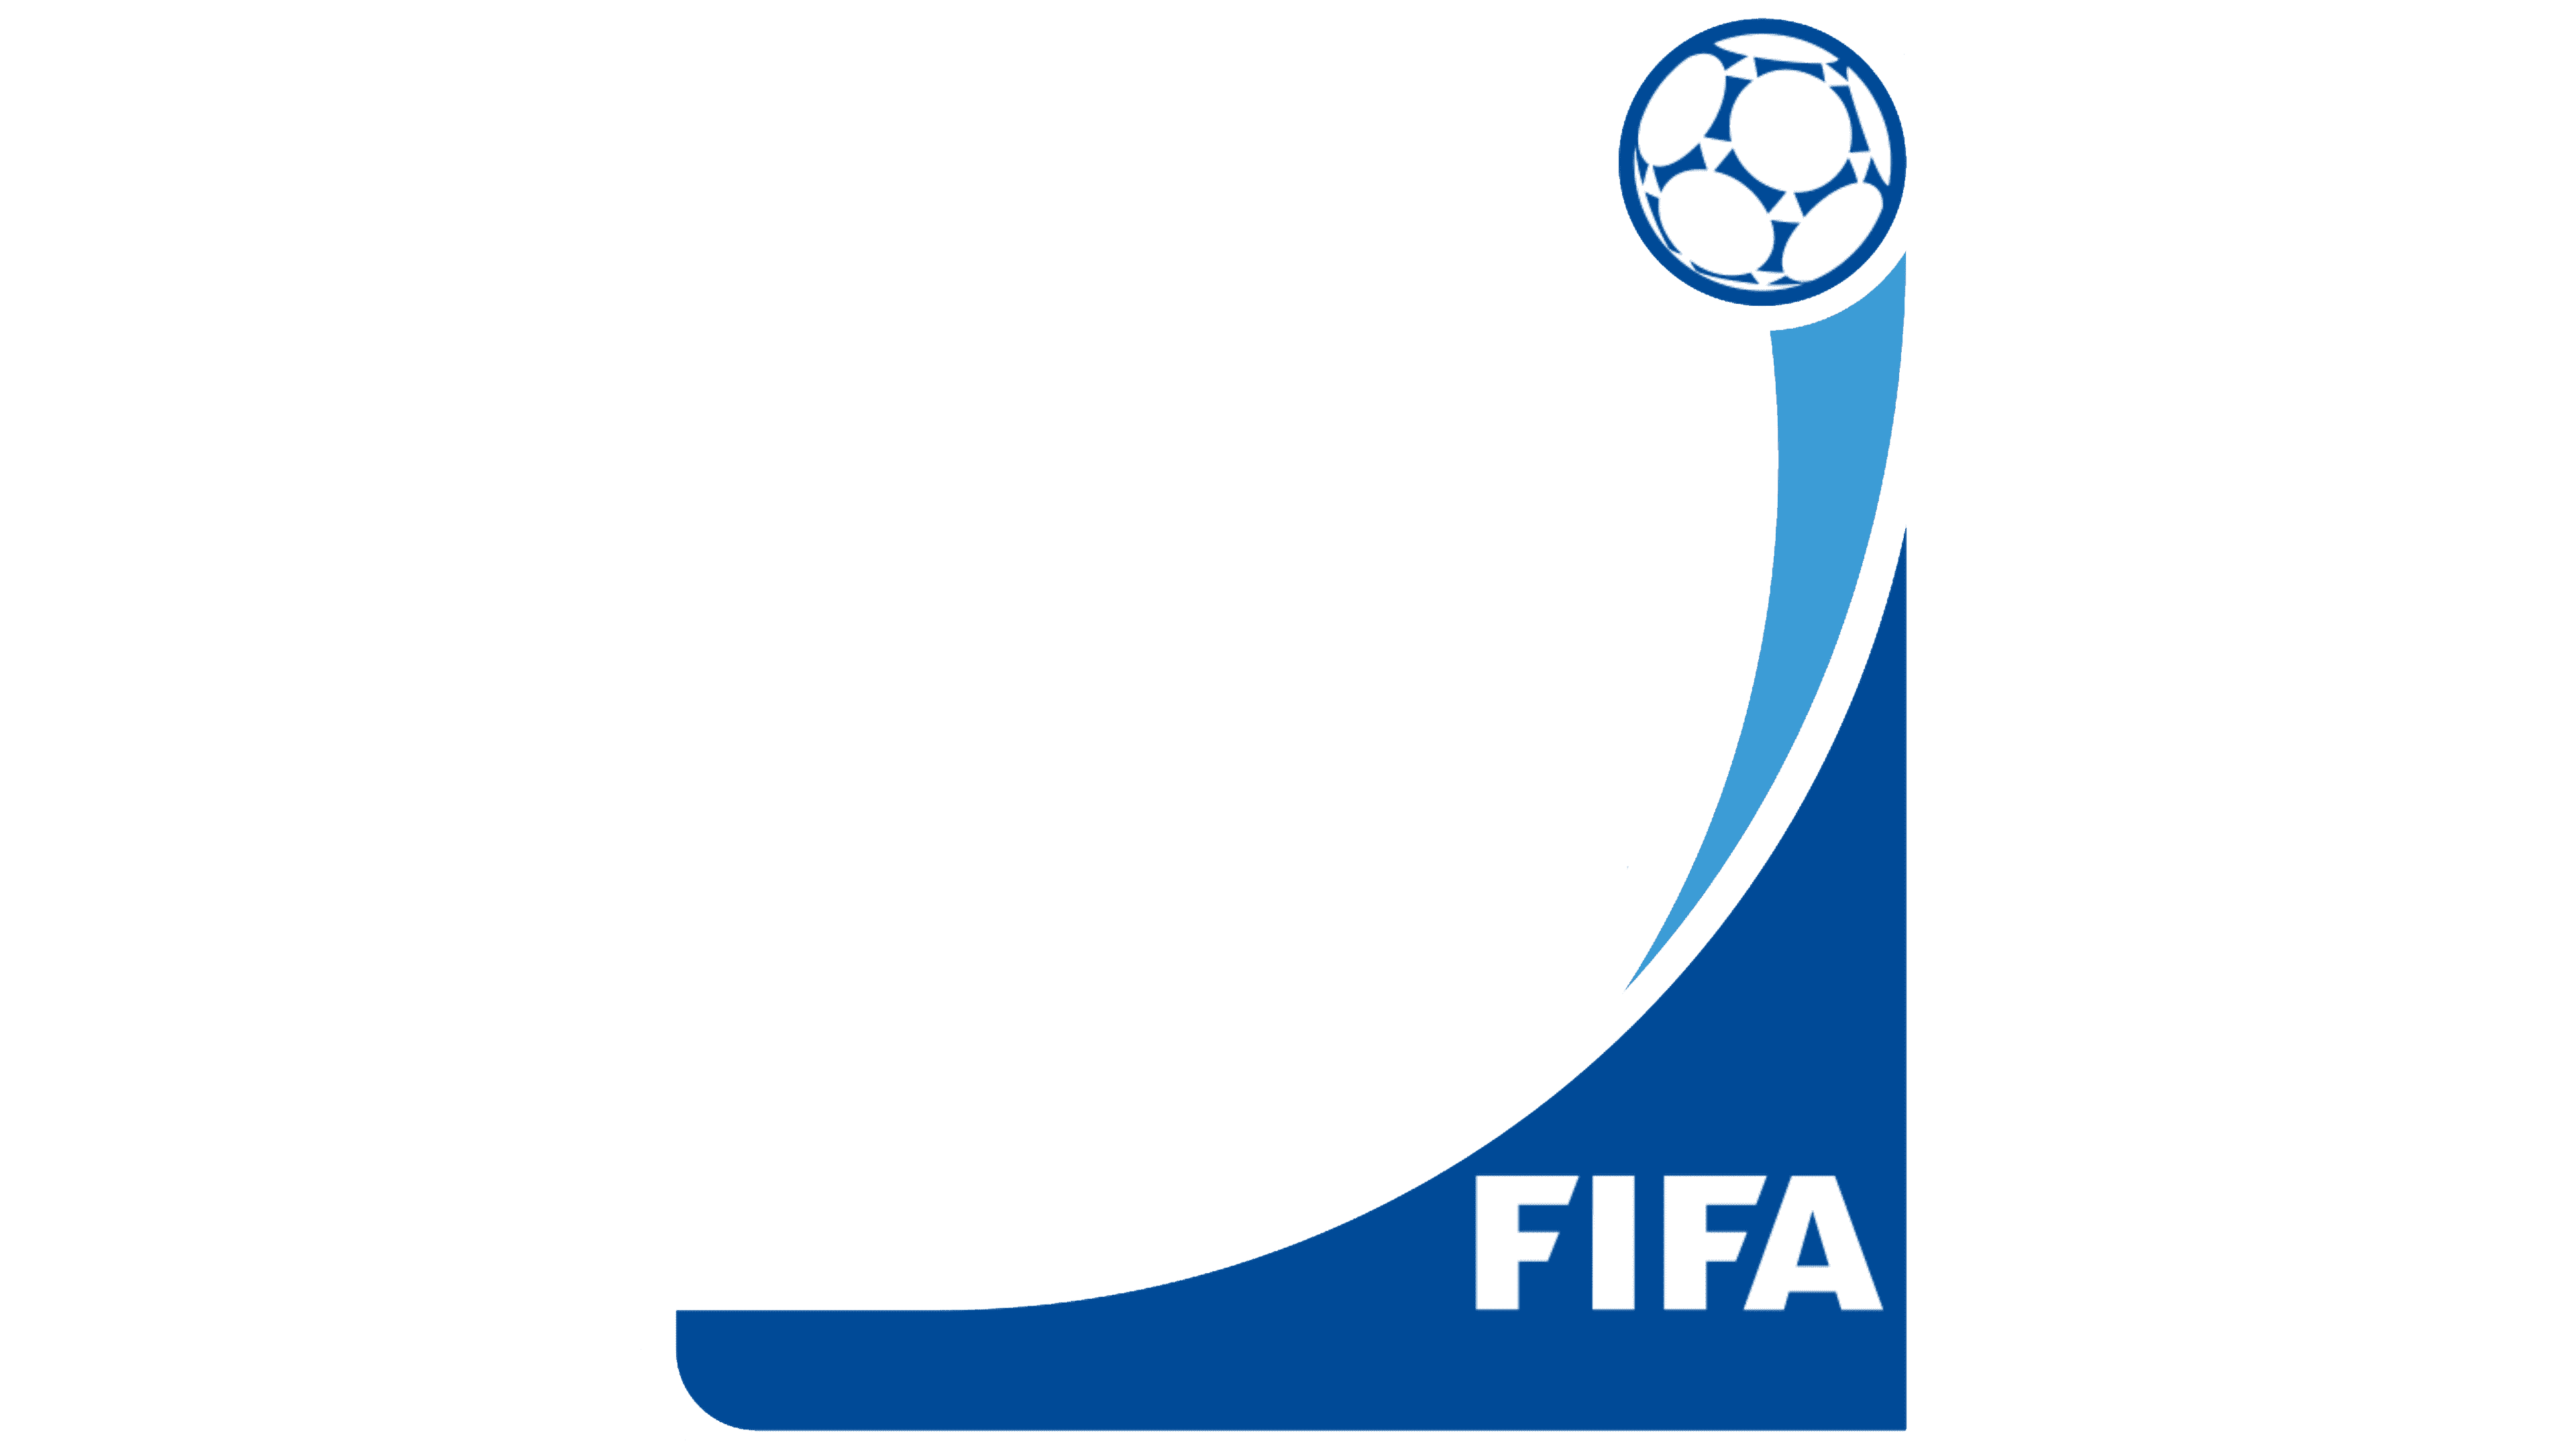 https://logos-world.net/wp-content/uploads/2021/02/FIFA-Logo-2004-2015.png